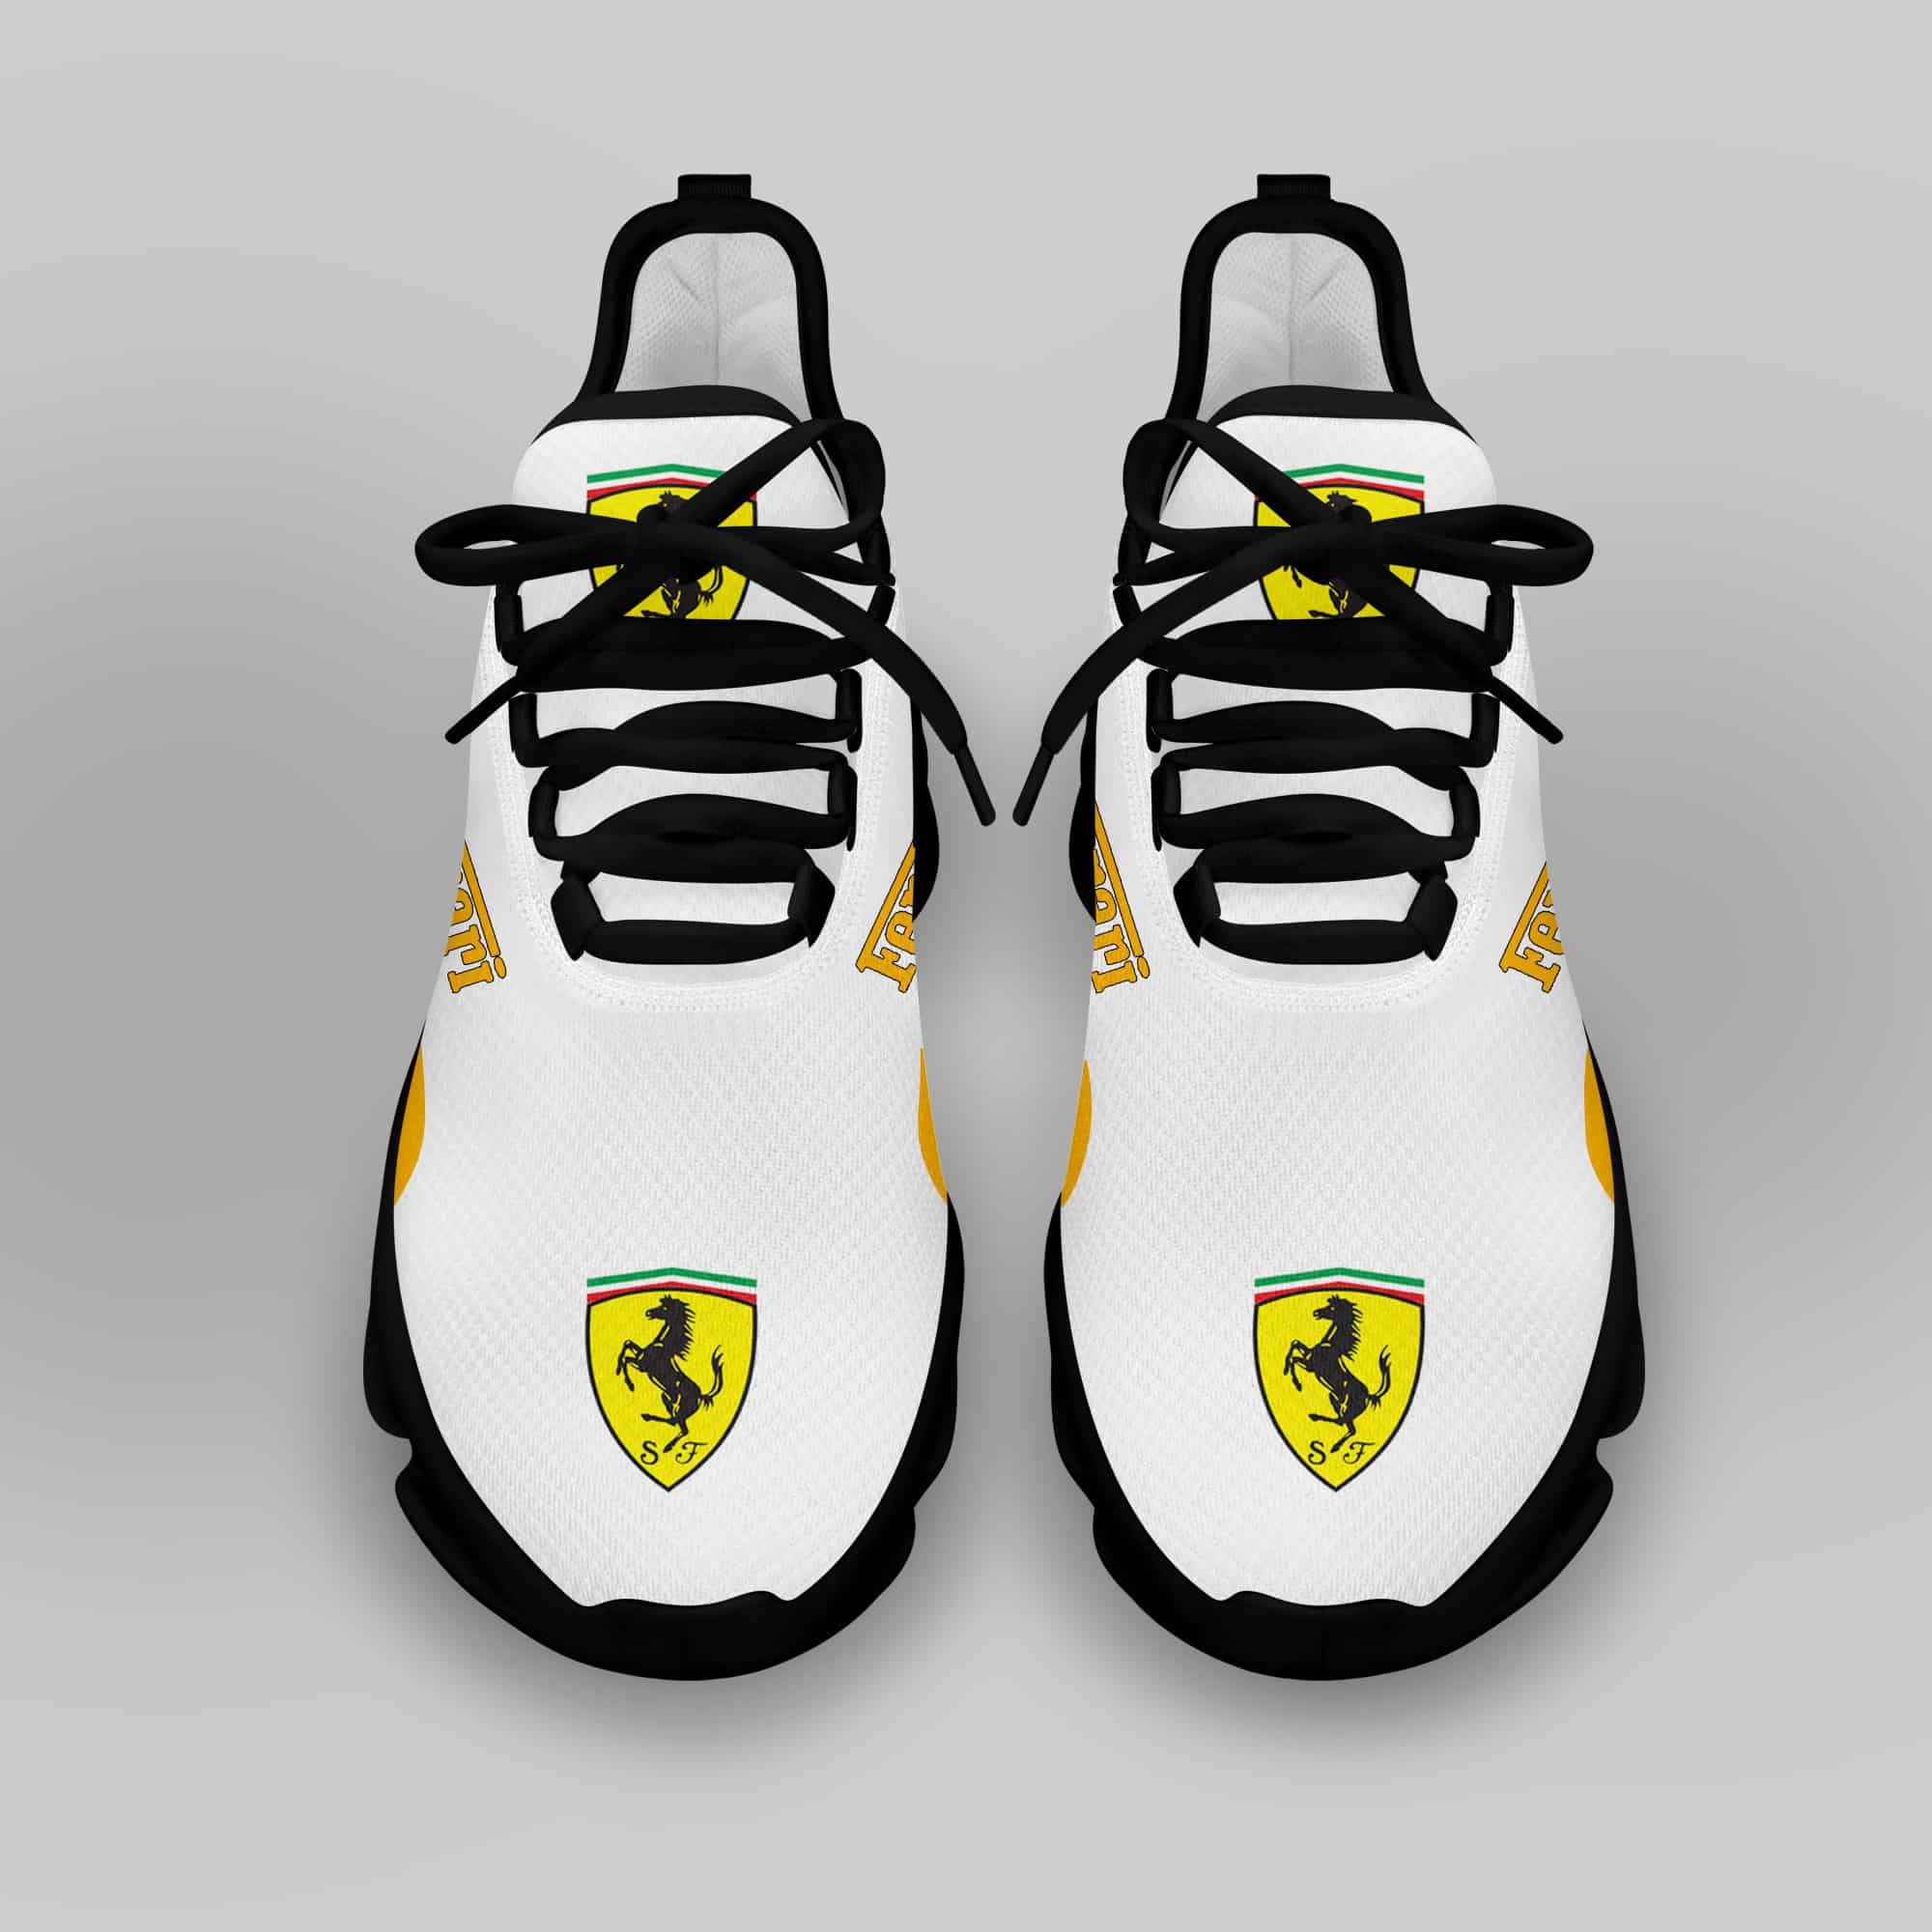 Ferrari Sneaker Running Shoes Max Soul Shoes Sneakers Ver 21 4